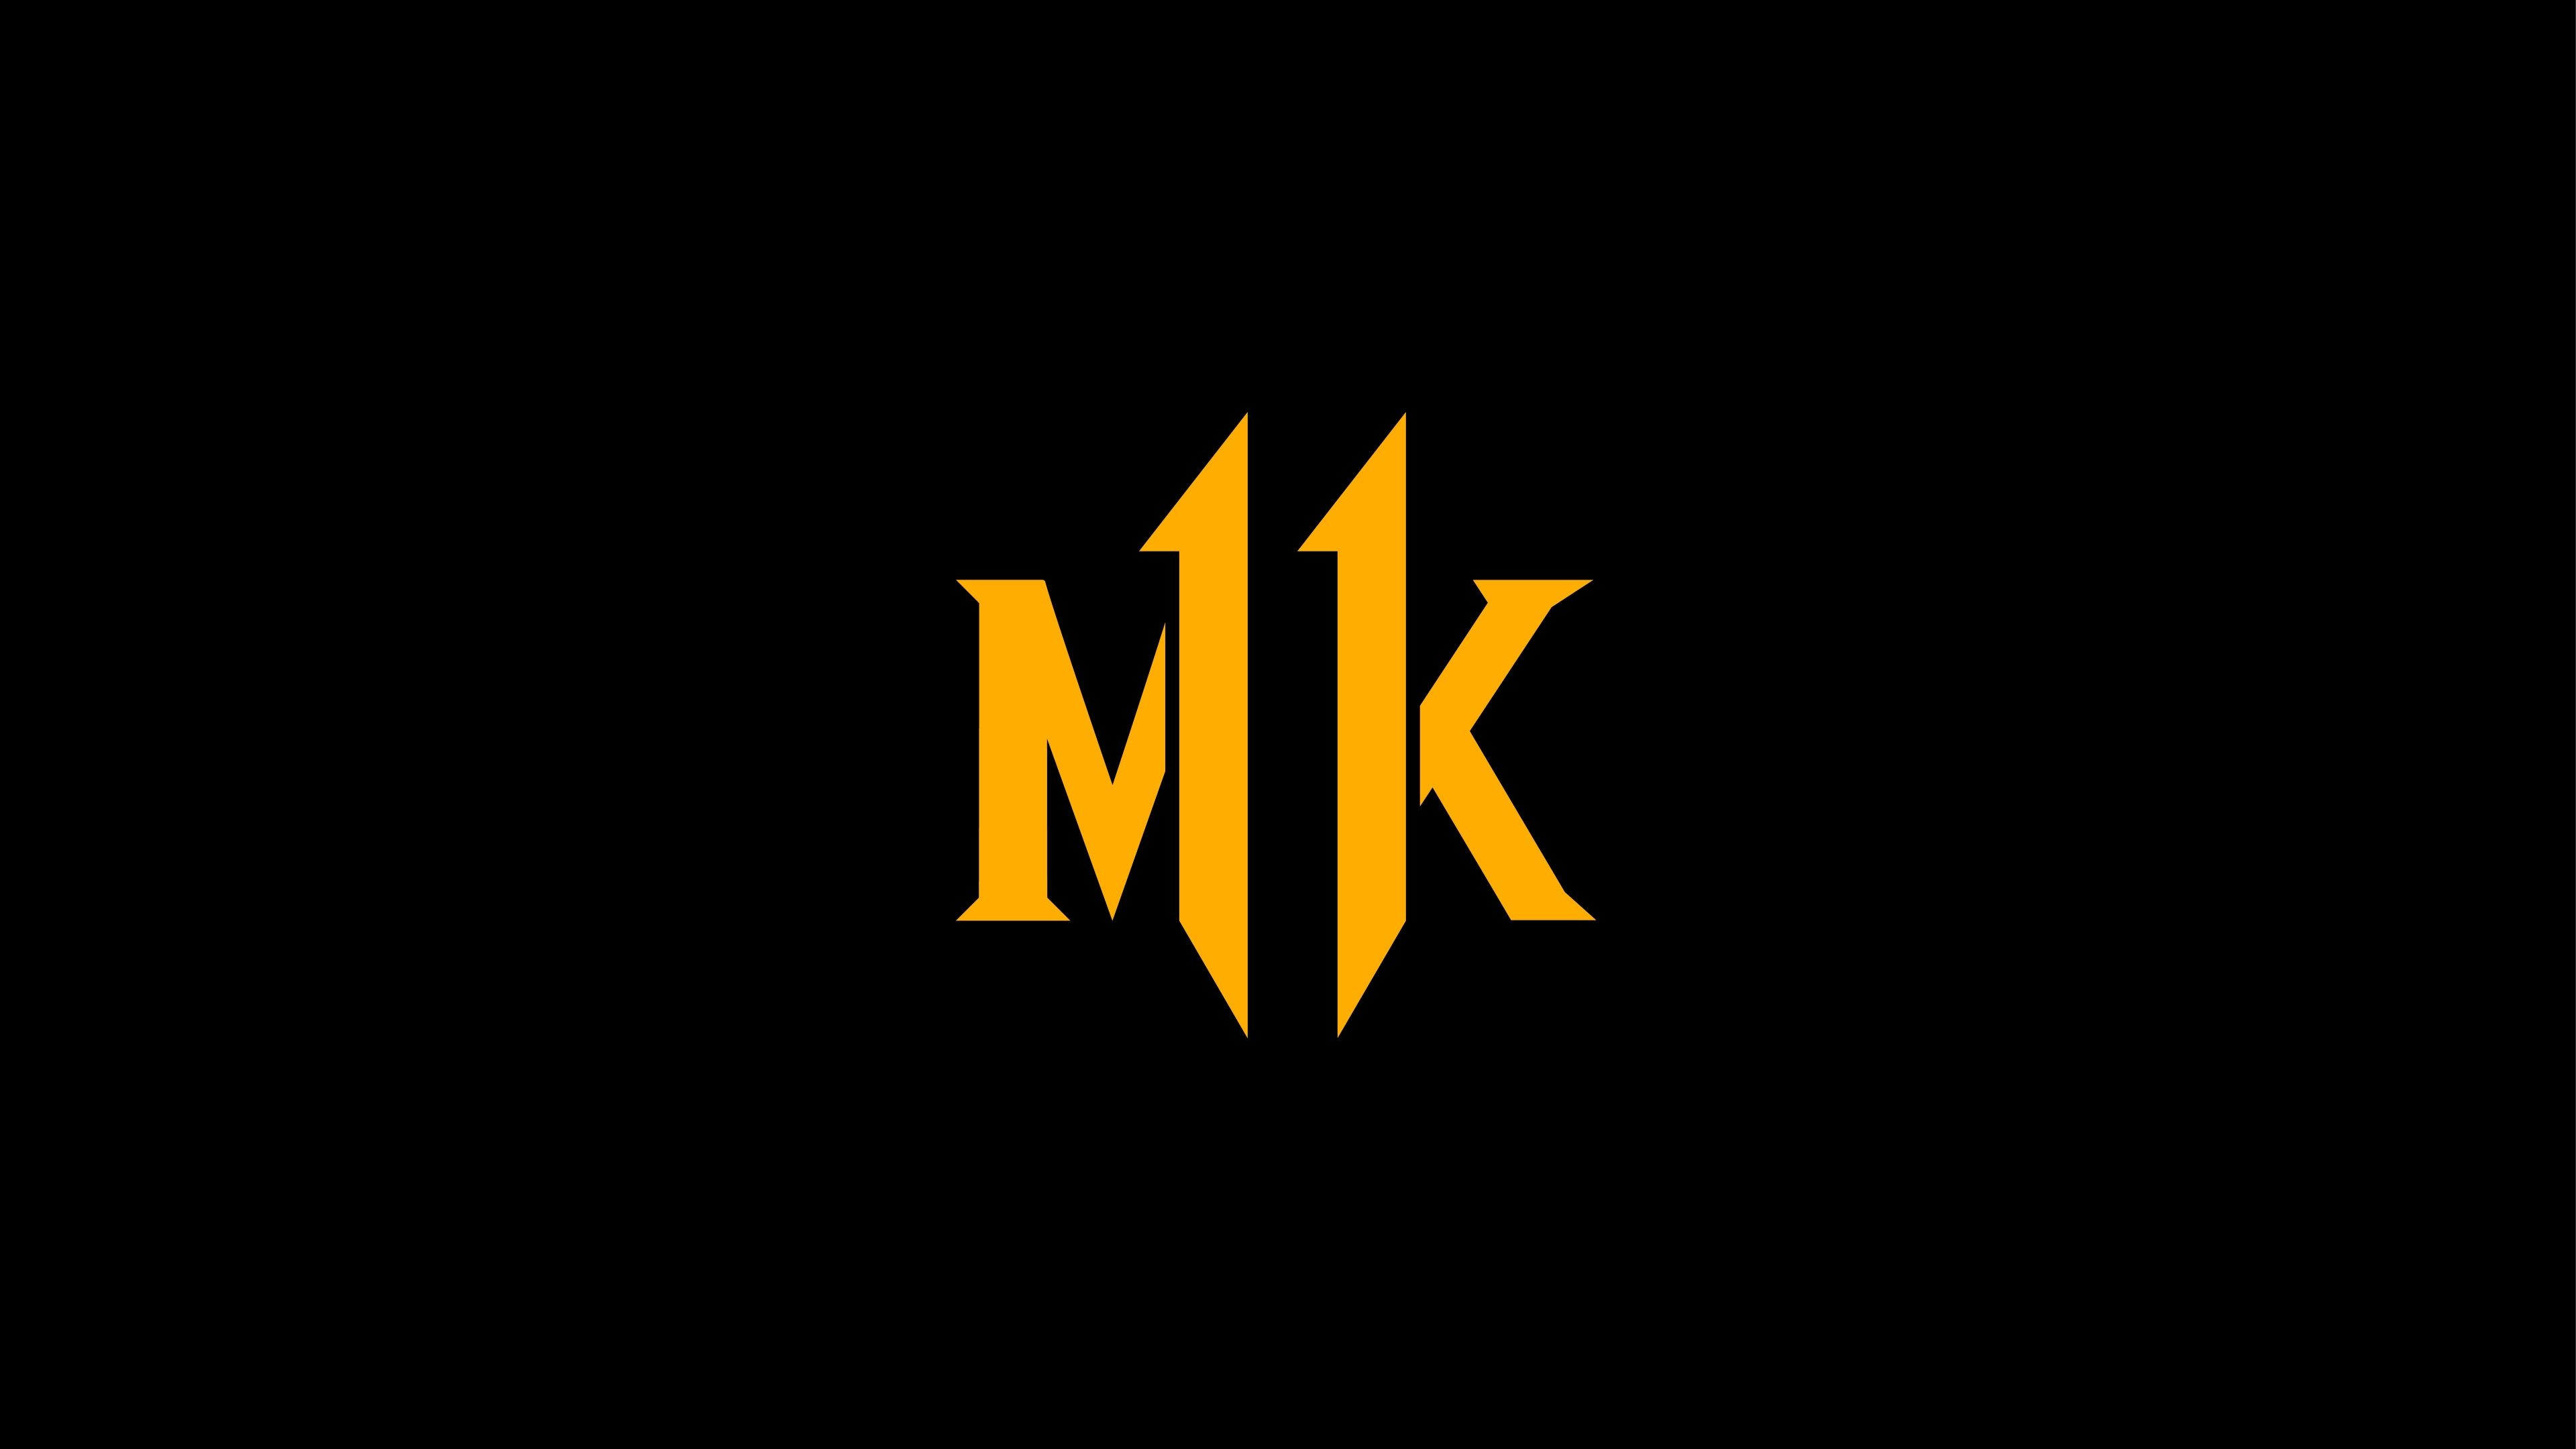 MK Logo Wallpapers - Wallpaper Cave